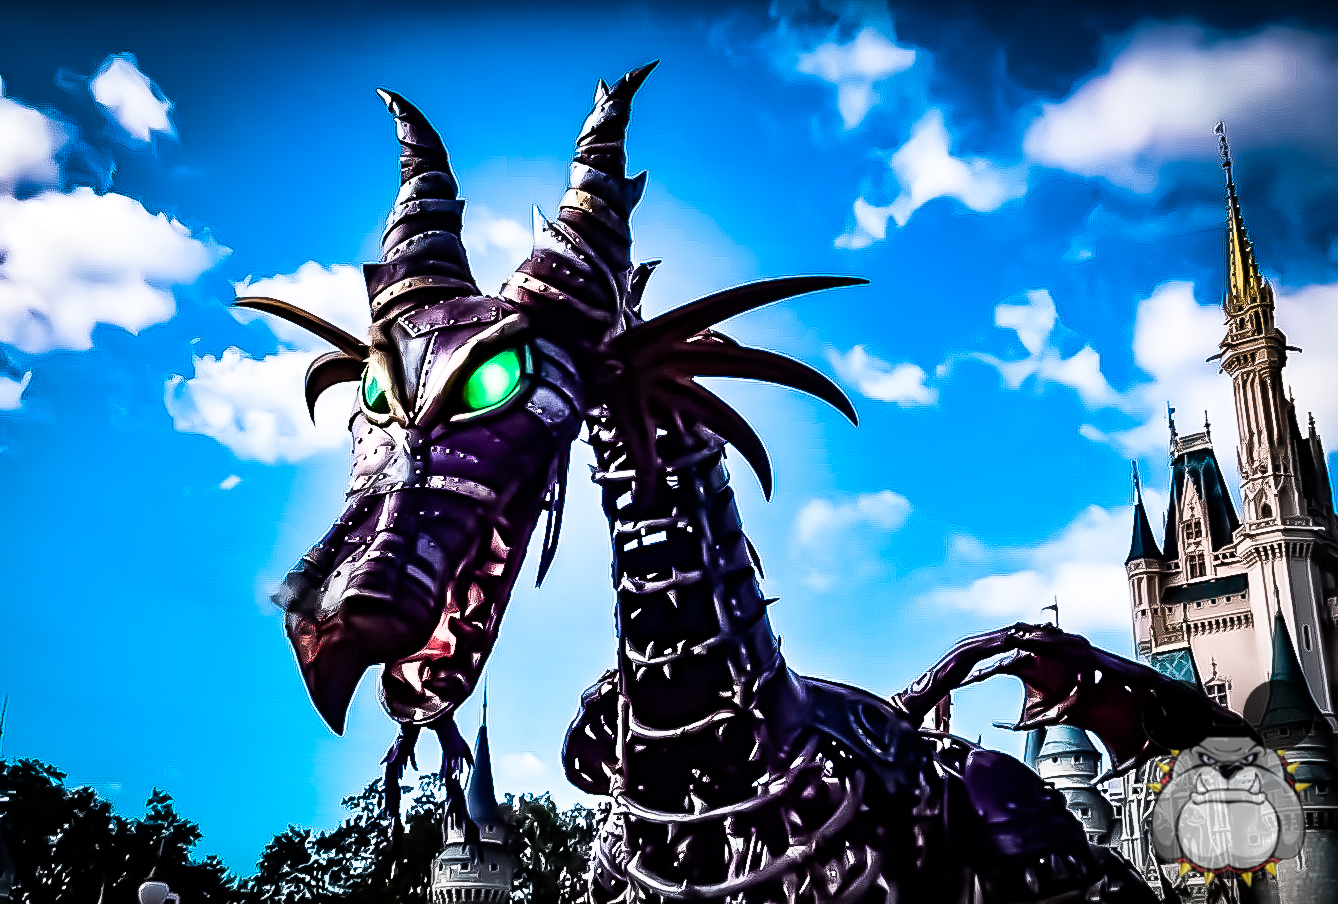 Disney Announces the Return of “Festival of Fantasy” Parade Date